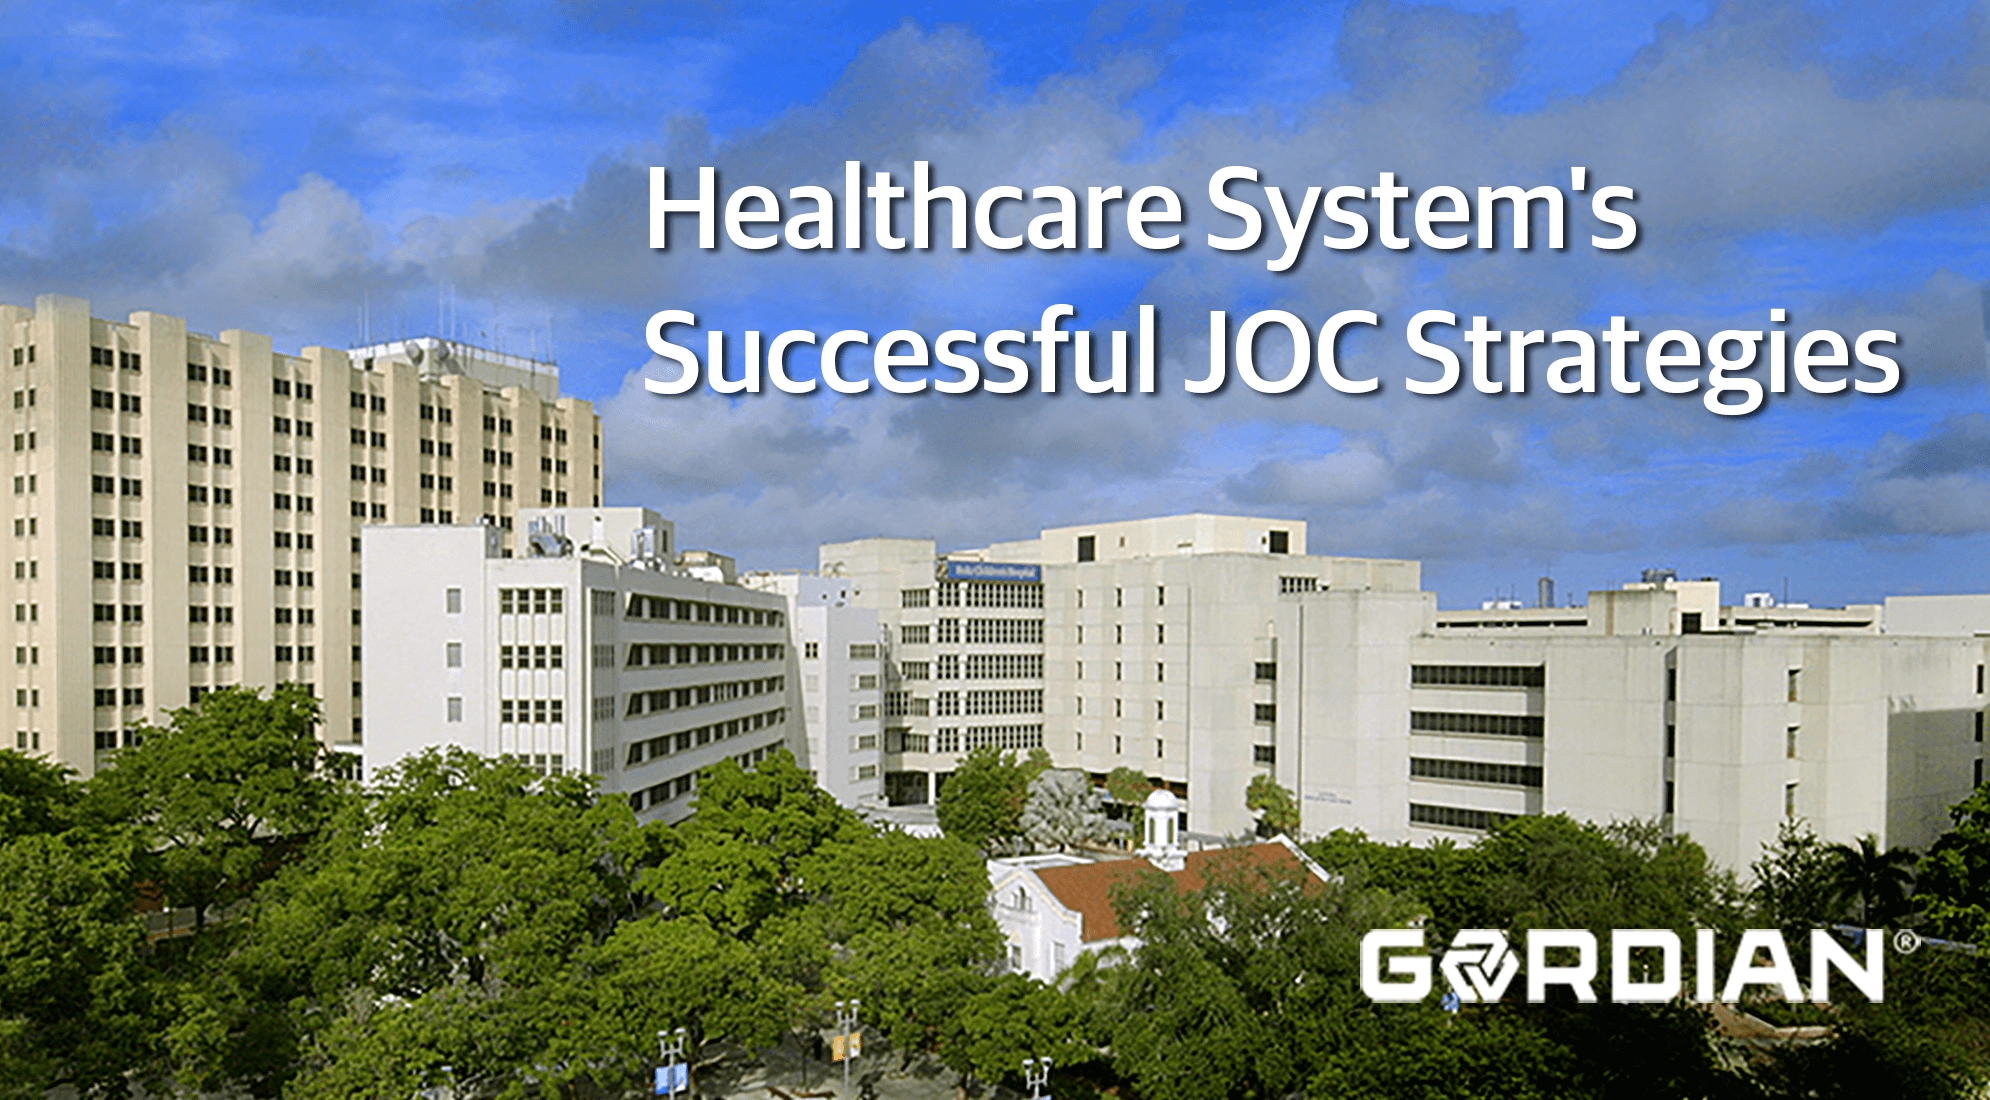 Healthcare System’s Successful JOC Strategies